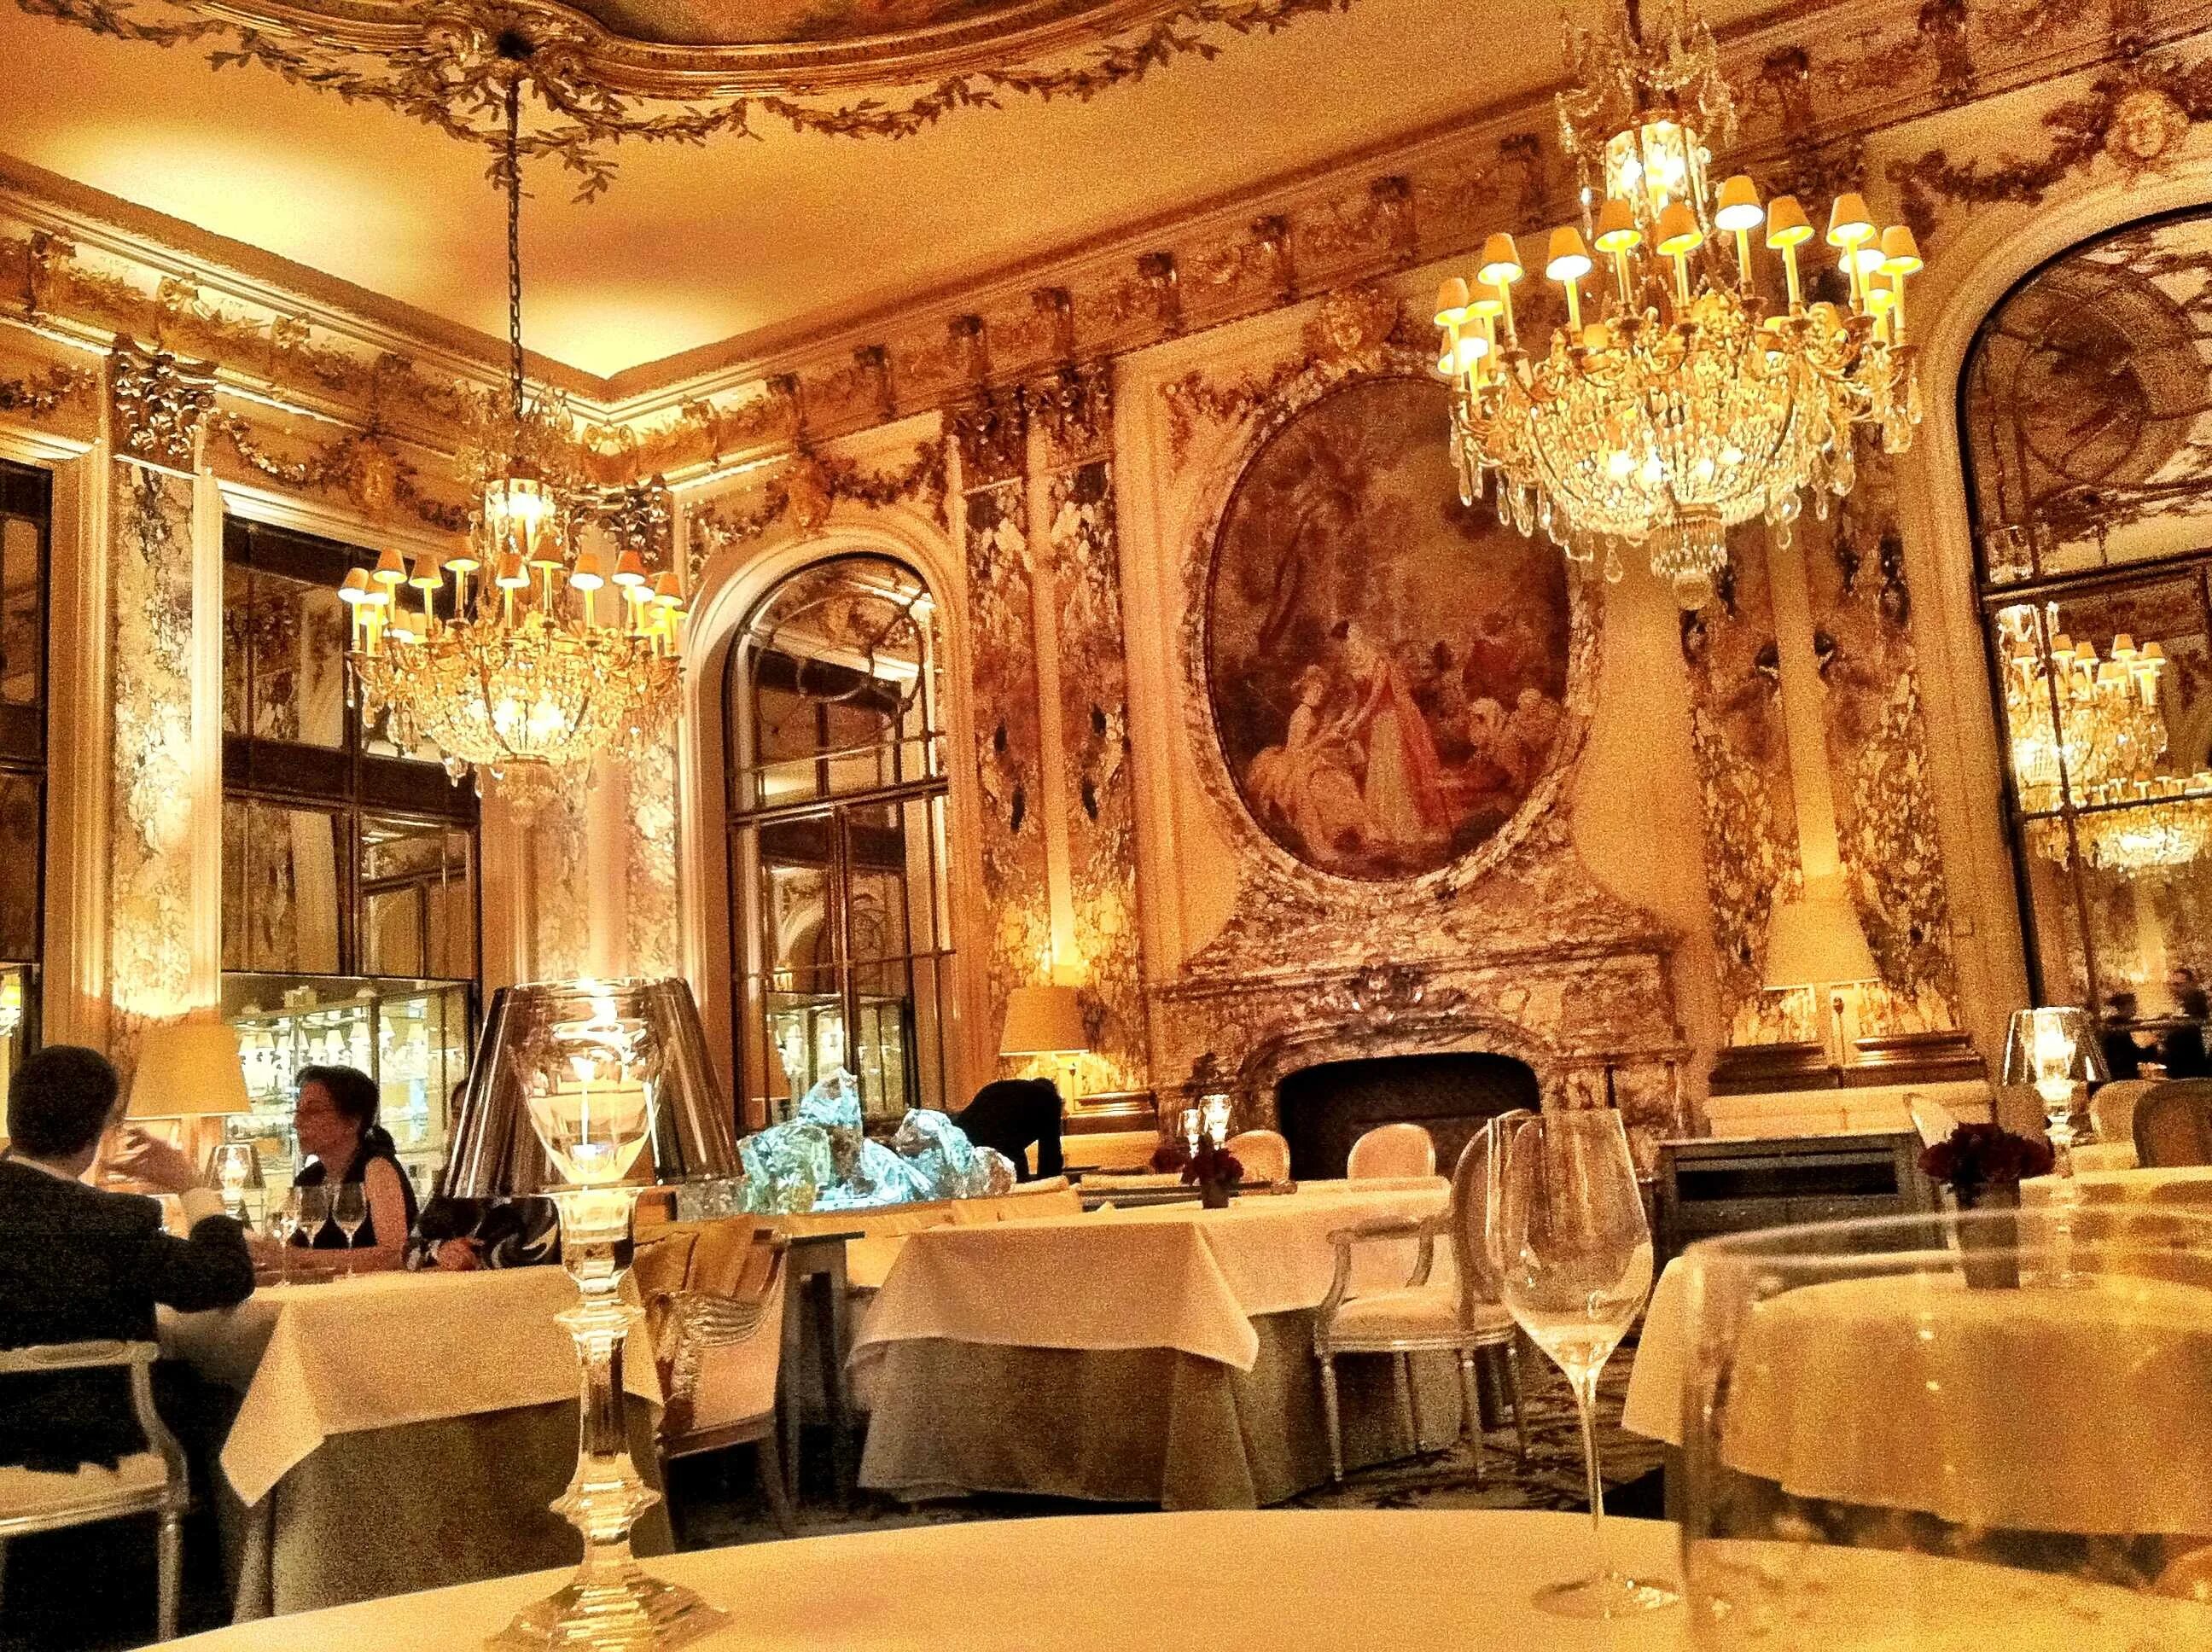 Названия дорогих ресторанов. Ресторан le Meurice Париж. Отель le Meurice Париж 20 век. Epicure ресторан в Париже.